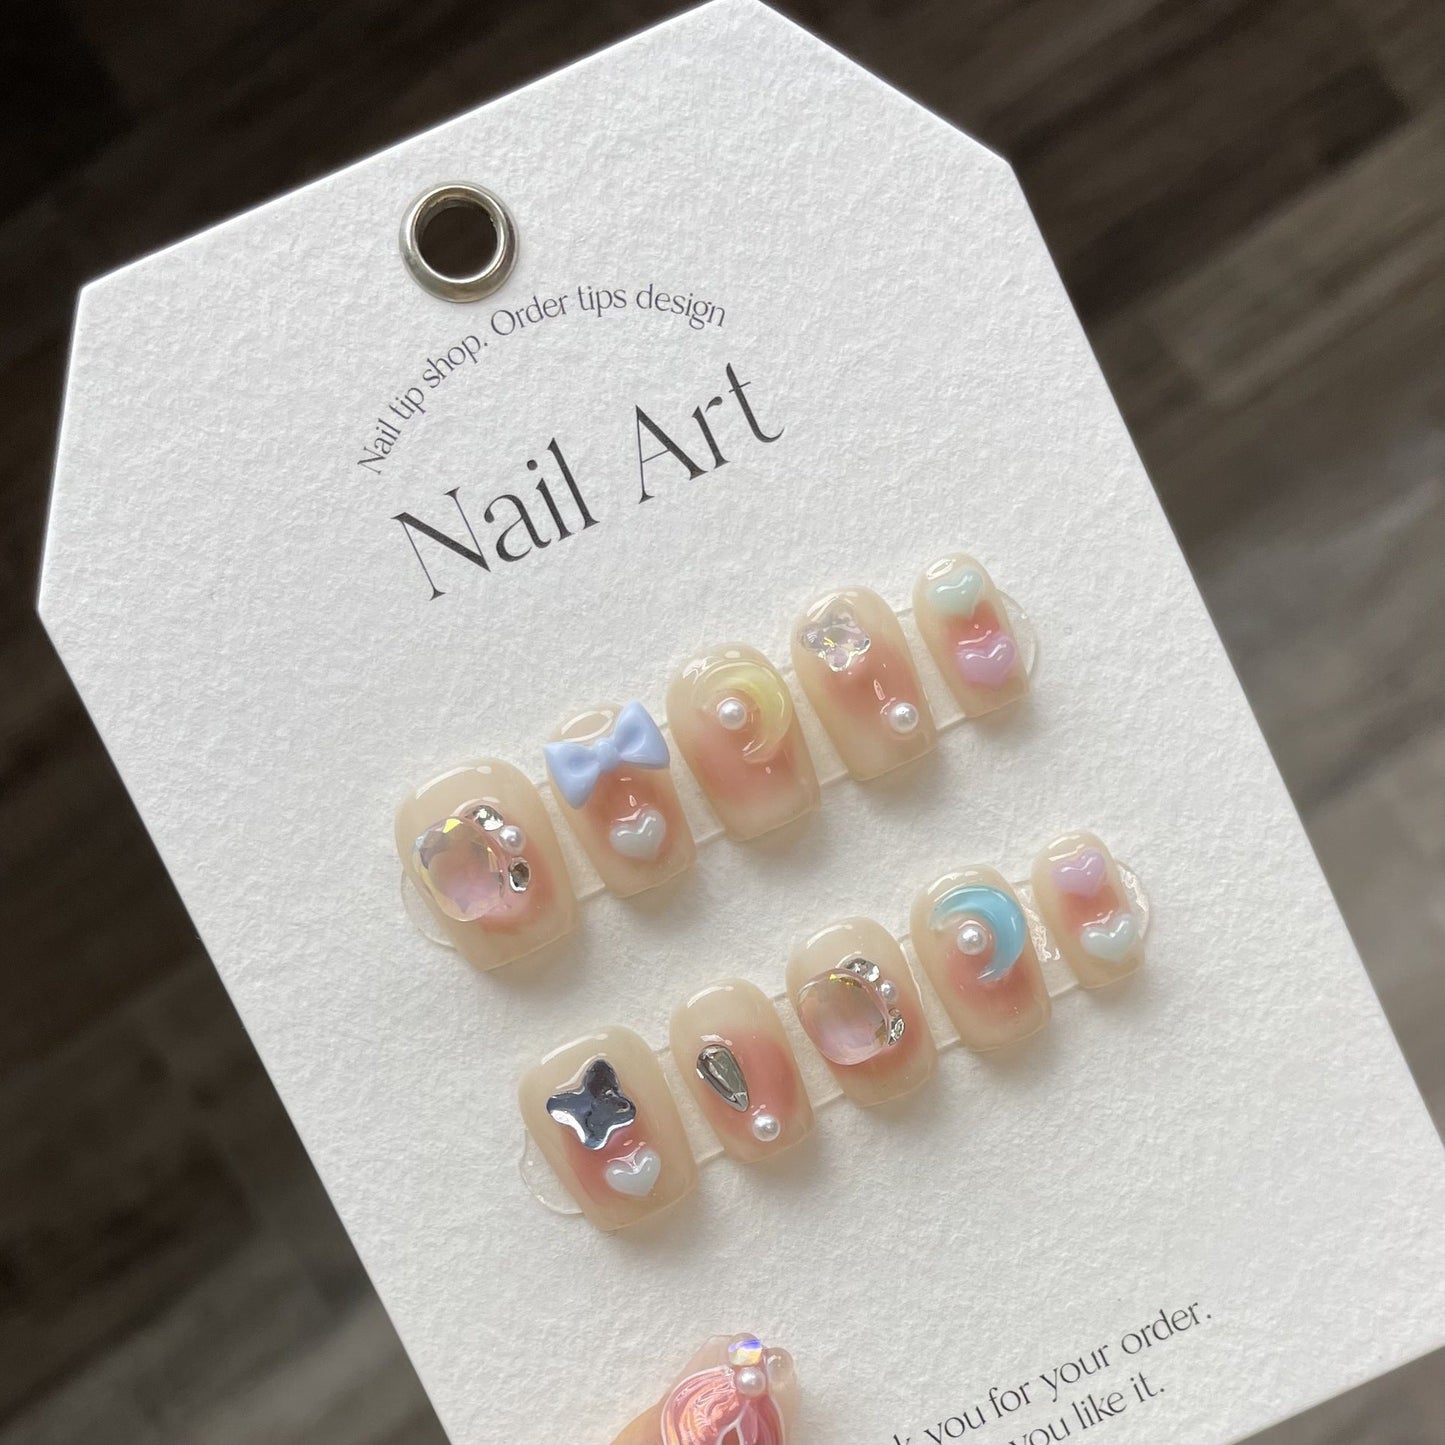 875 Cream Moon style press on nails 100% handmade false nails nude  color